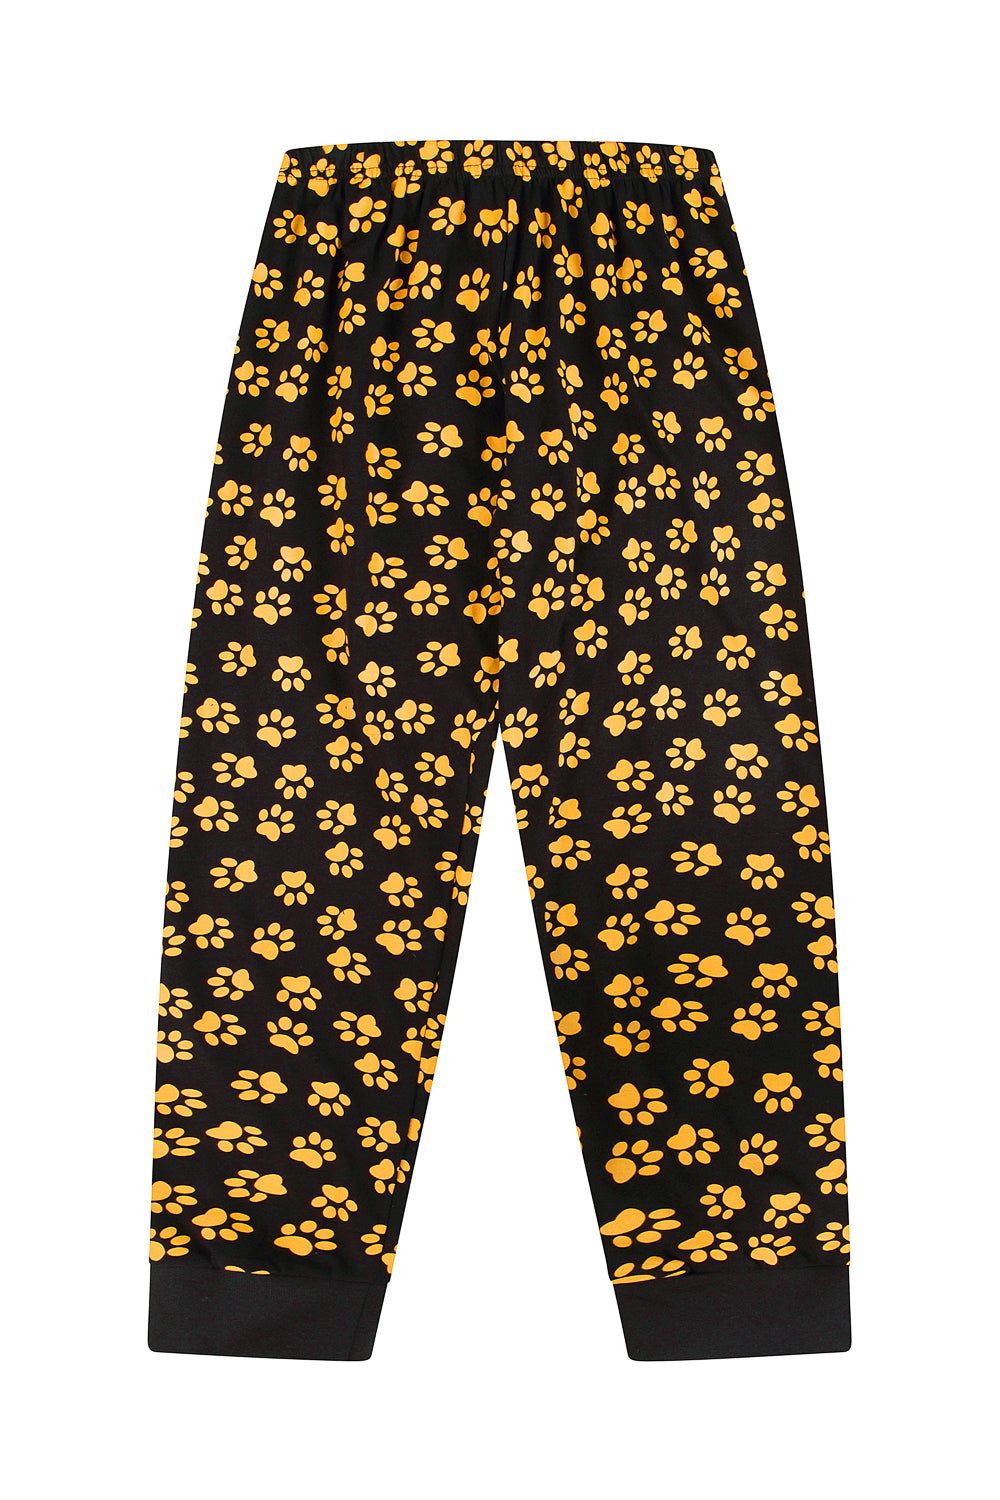 Lion Paw Print  3D Long Pyjamas - Pyjamas.com